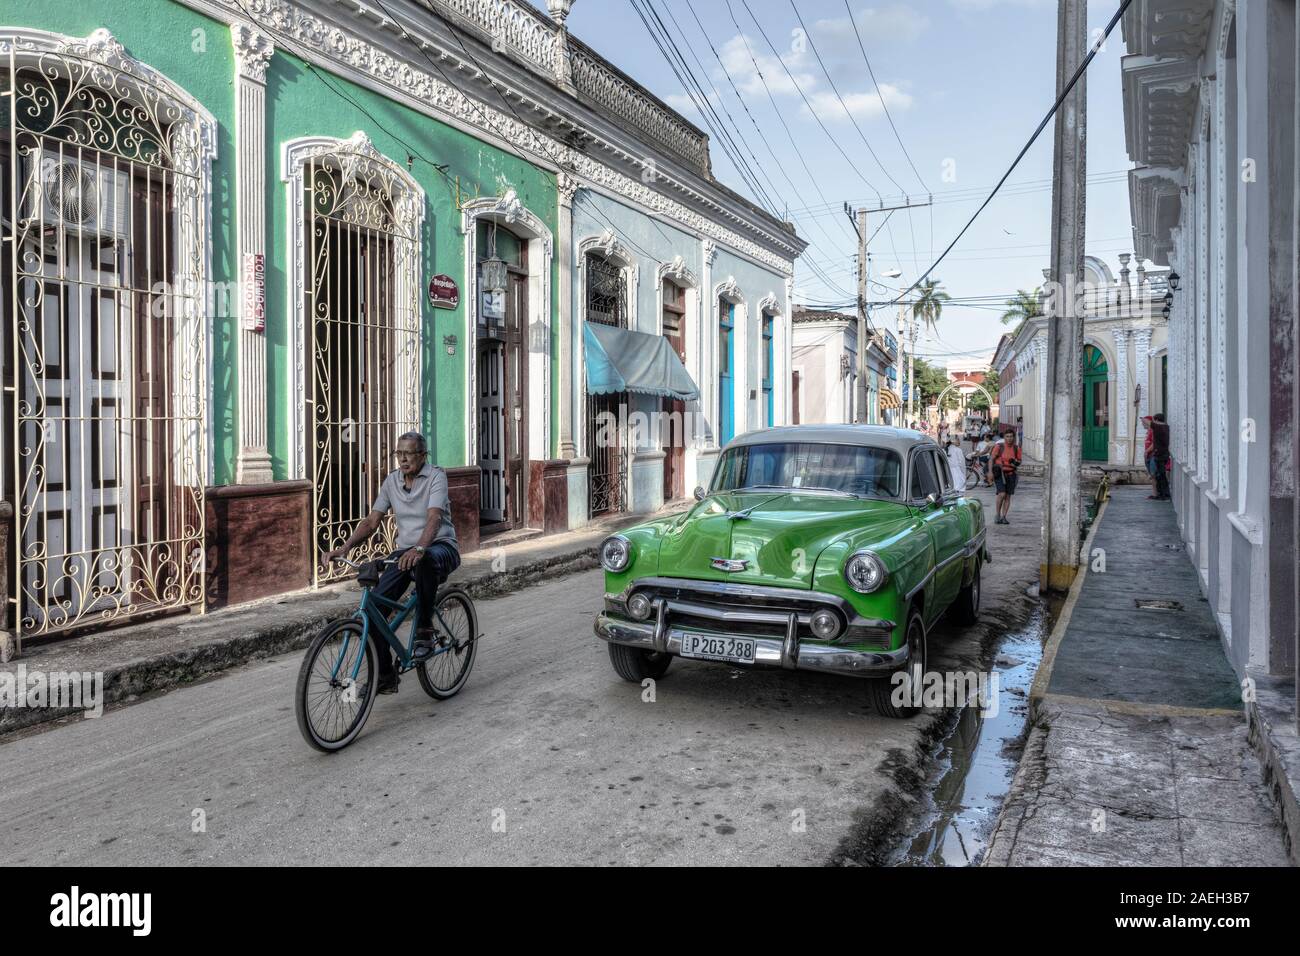 Remedios, Villa Clara, Cuba, América del Norte Foto de stock